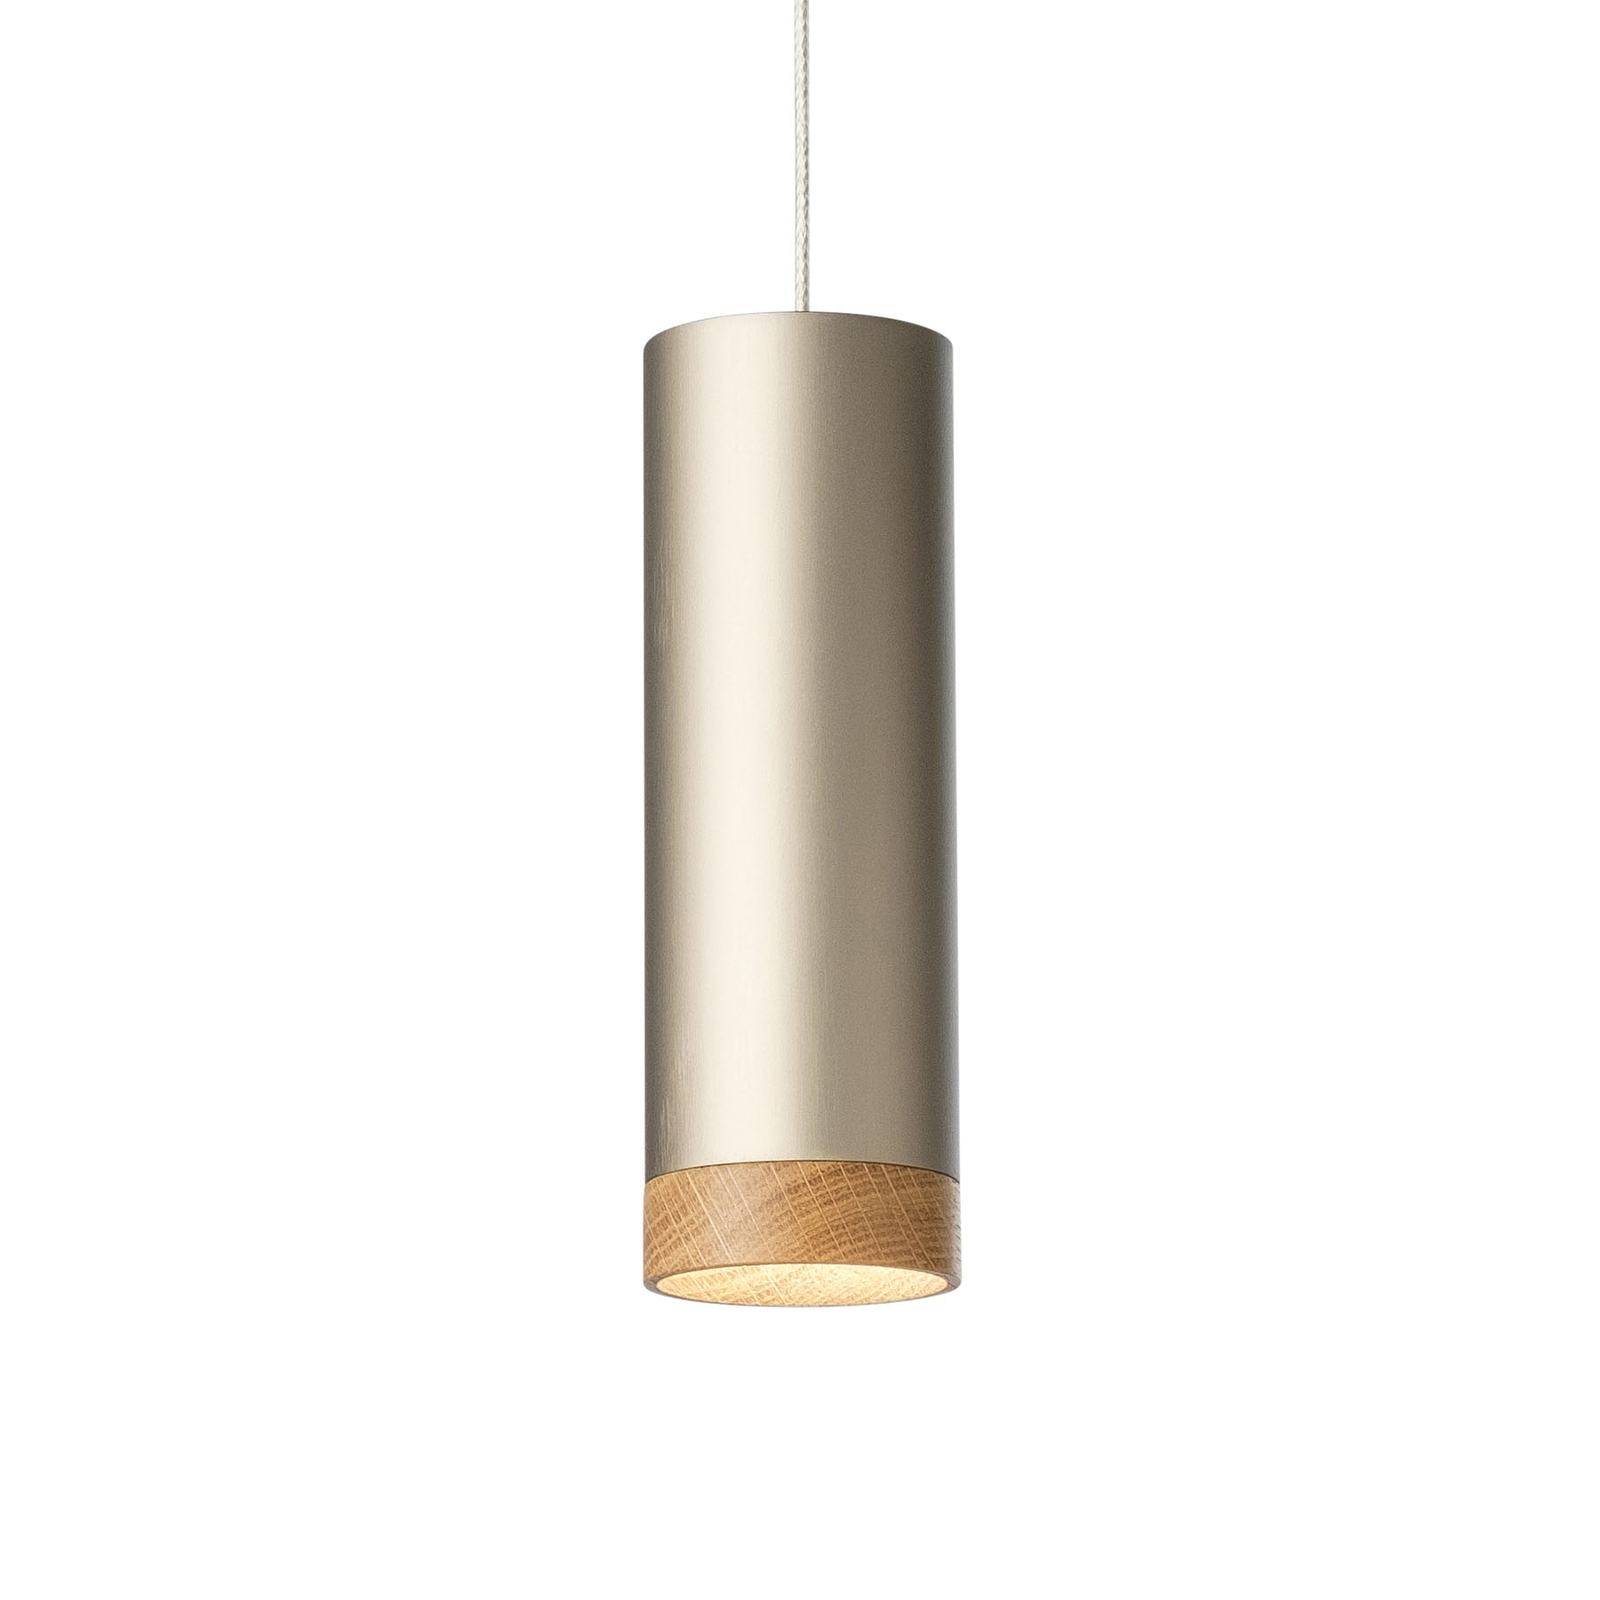 LED hanglamp PHEB, zilver brons/eikenhout